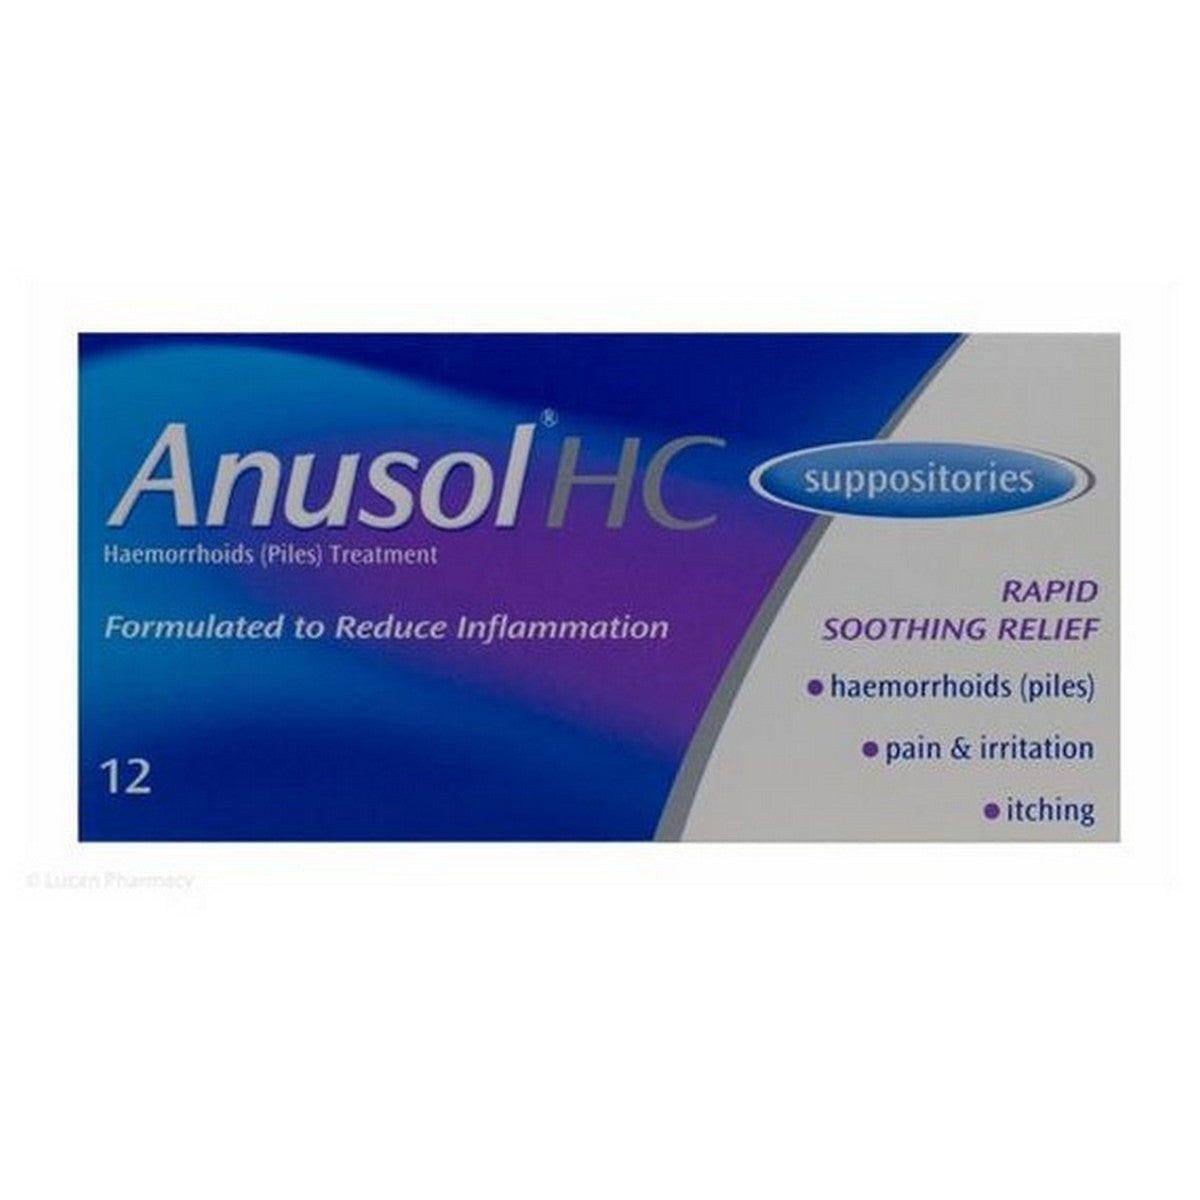 Anusol HC Suppositories 12